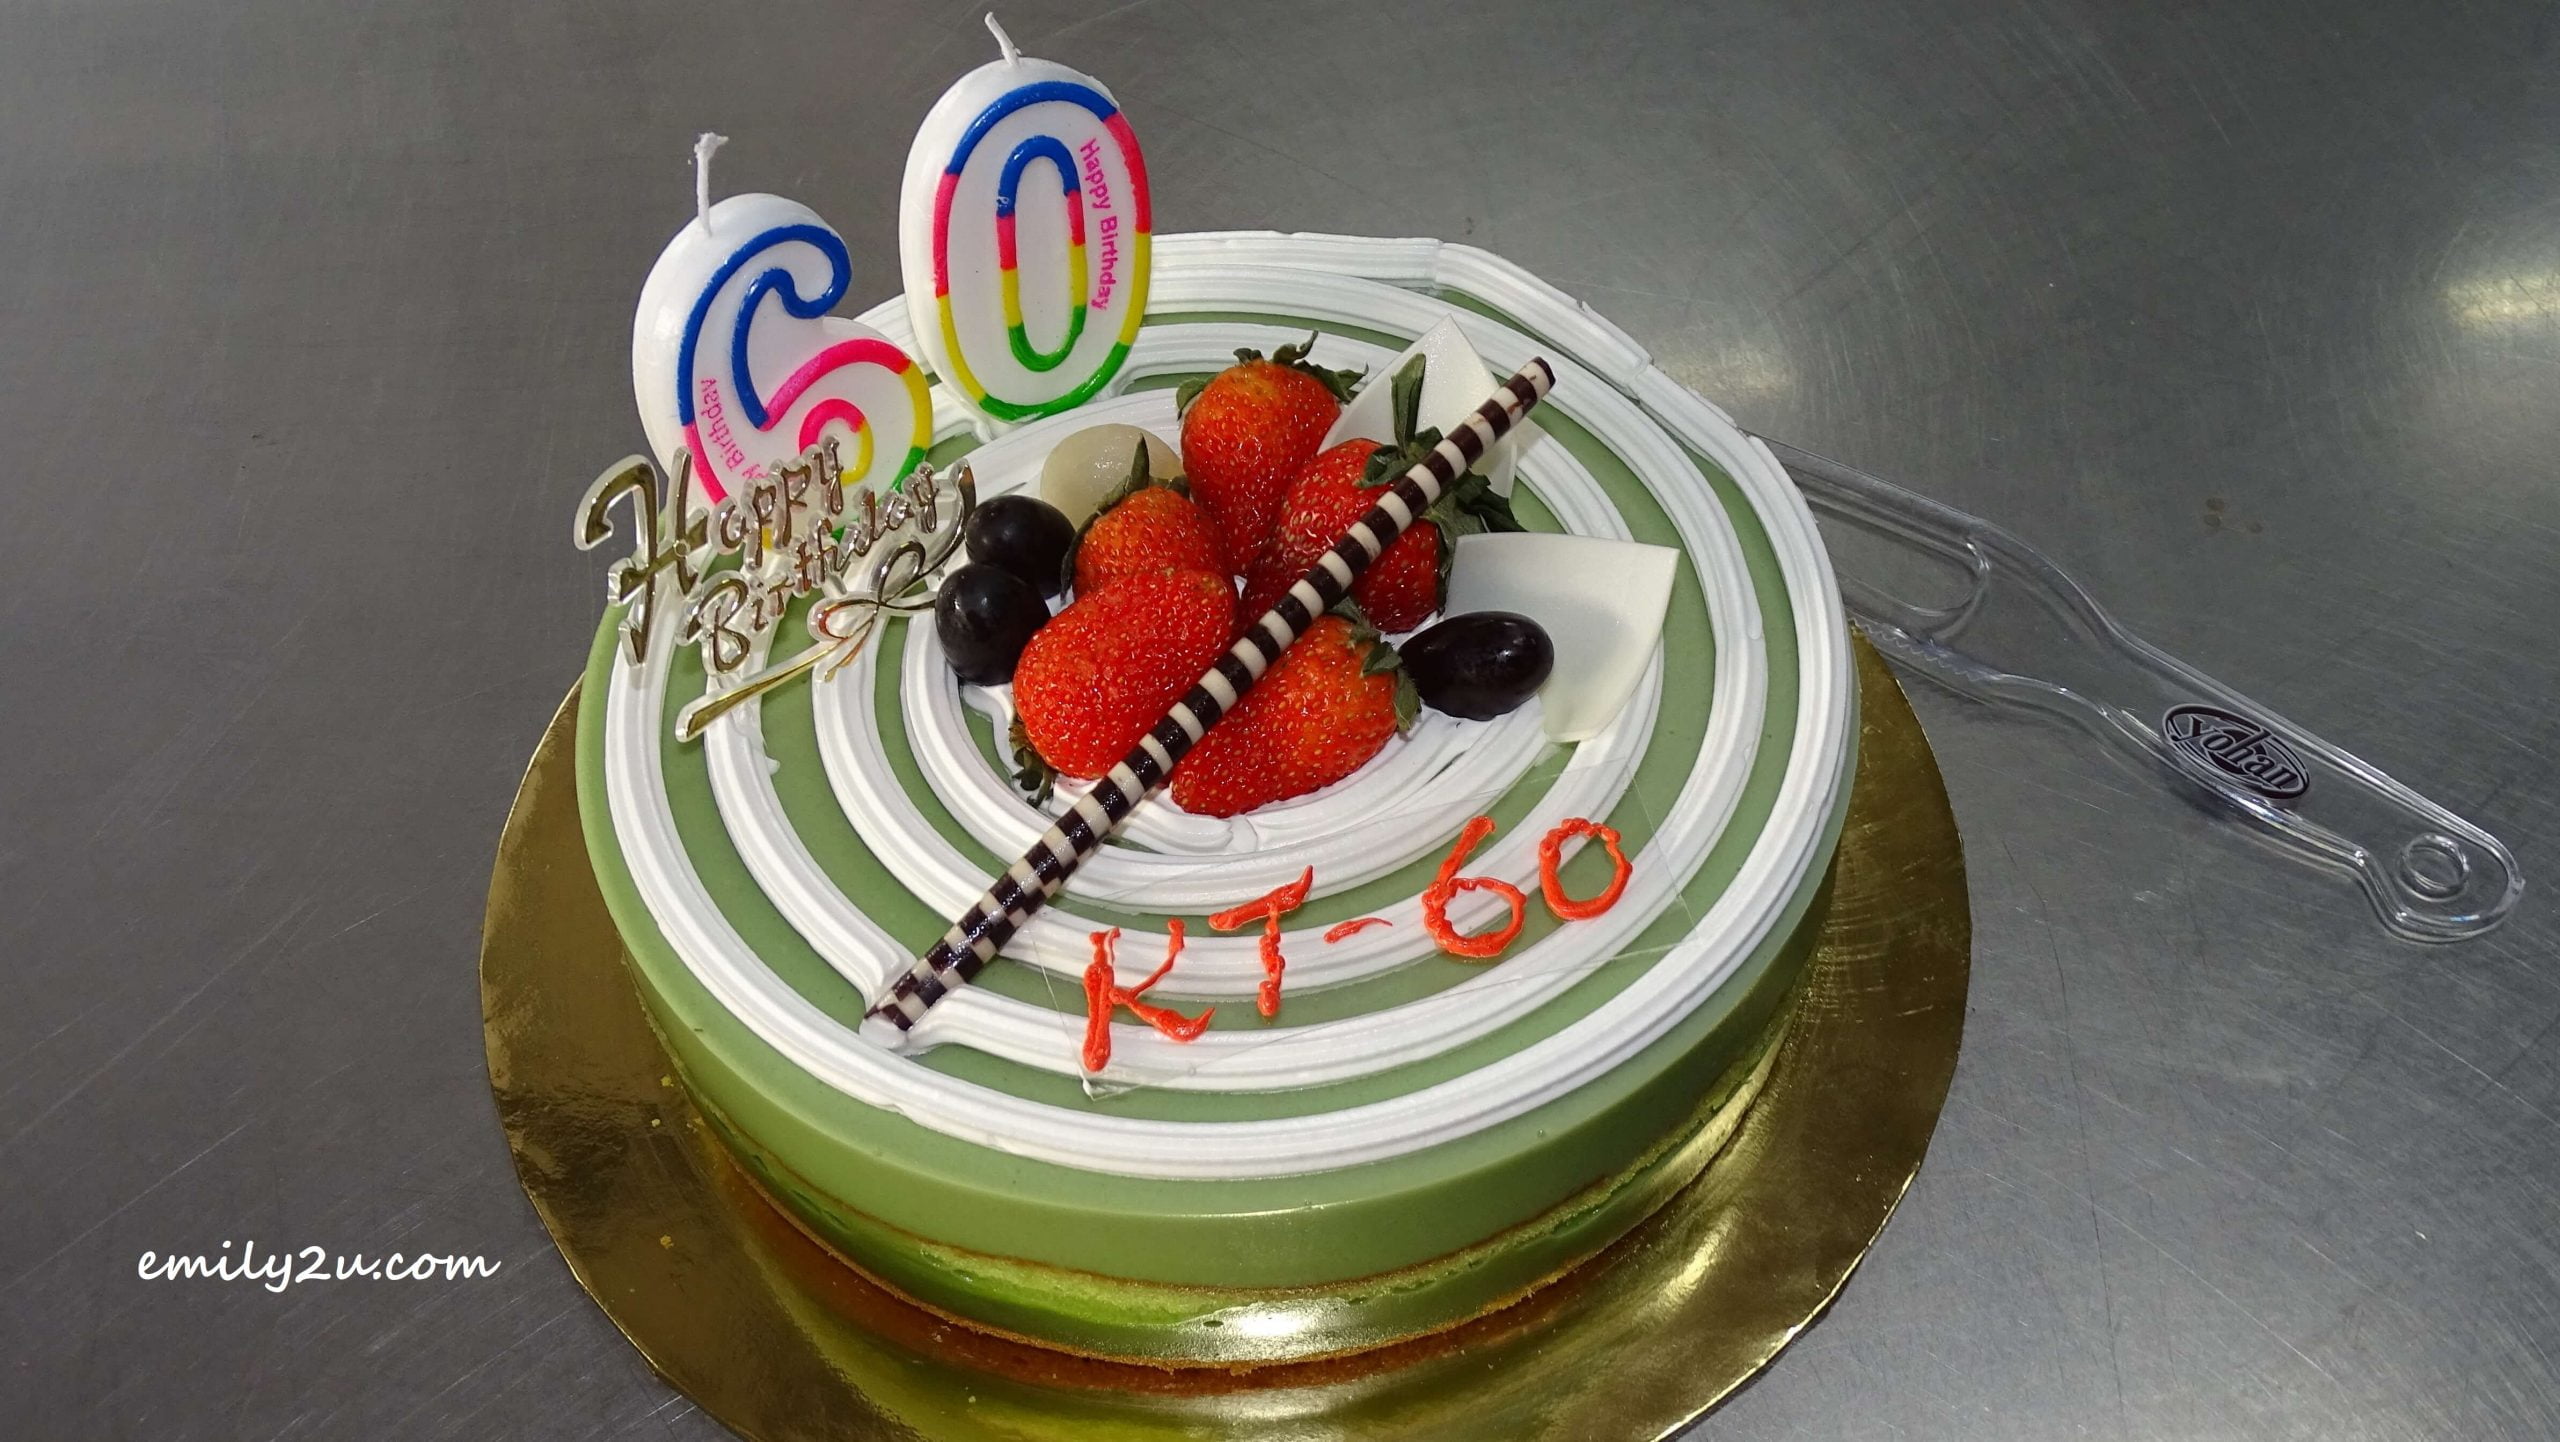 KT PIllai's 60th birthday cake